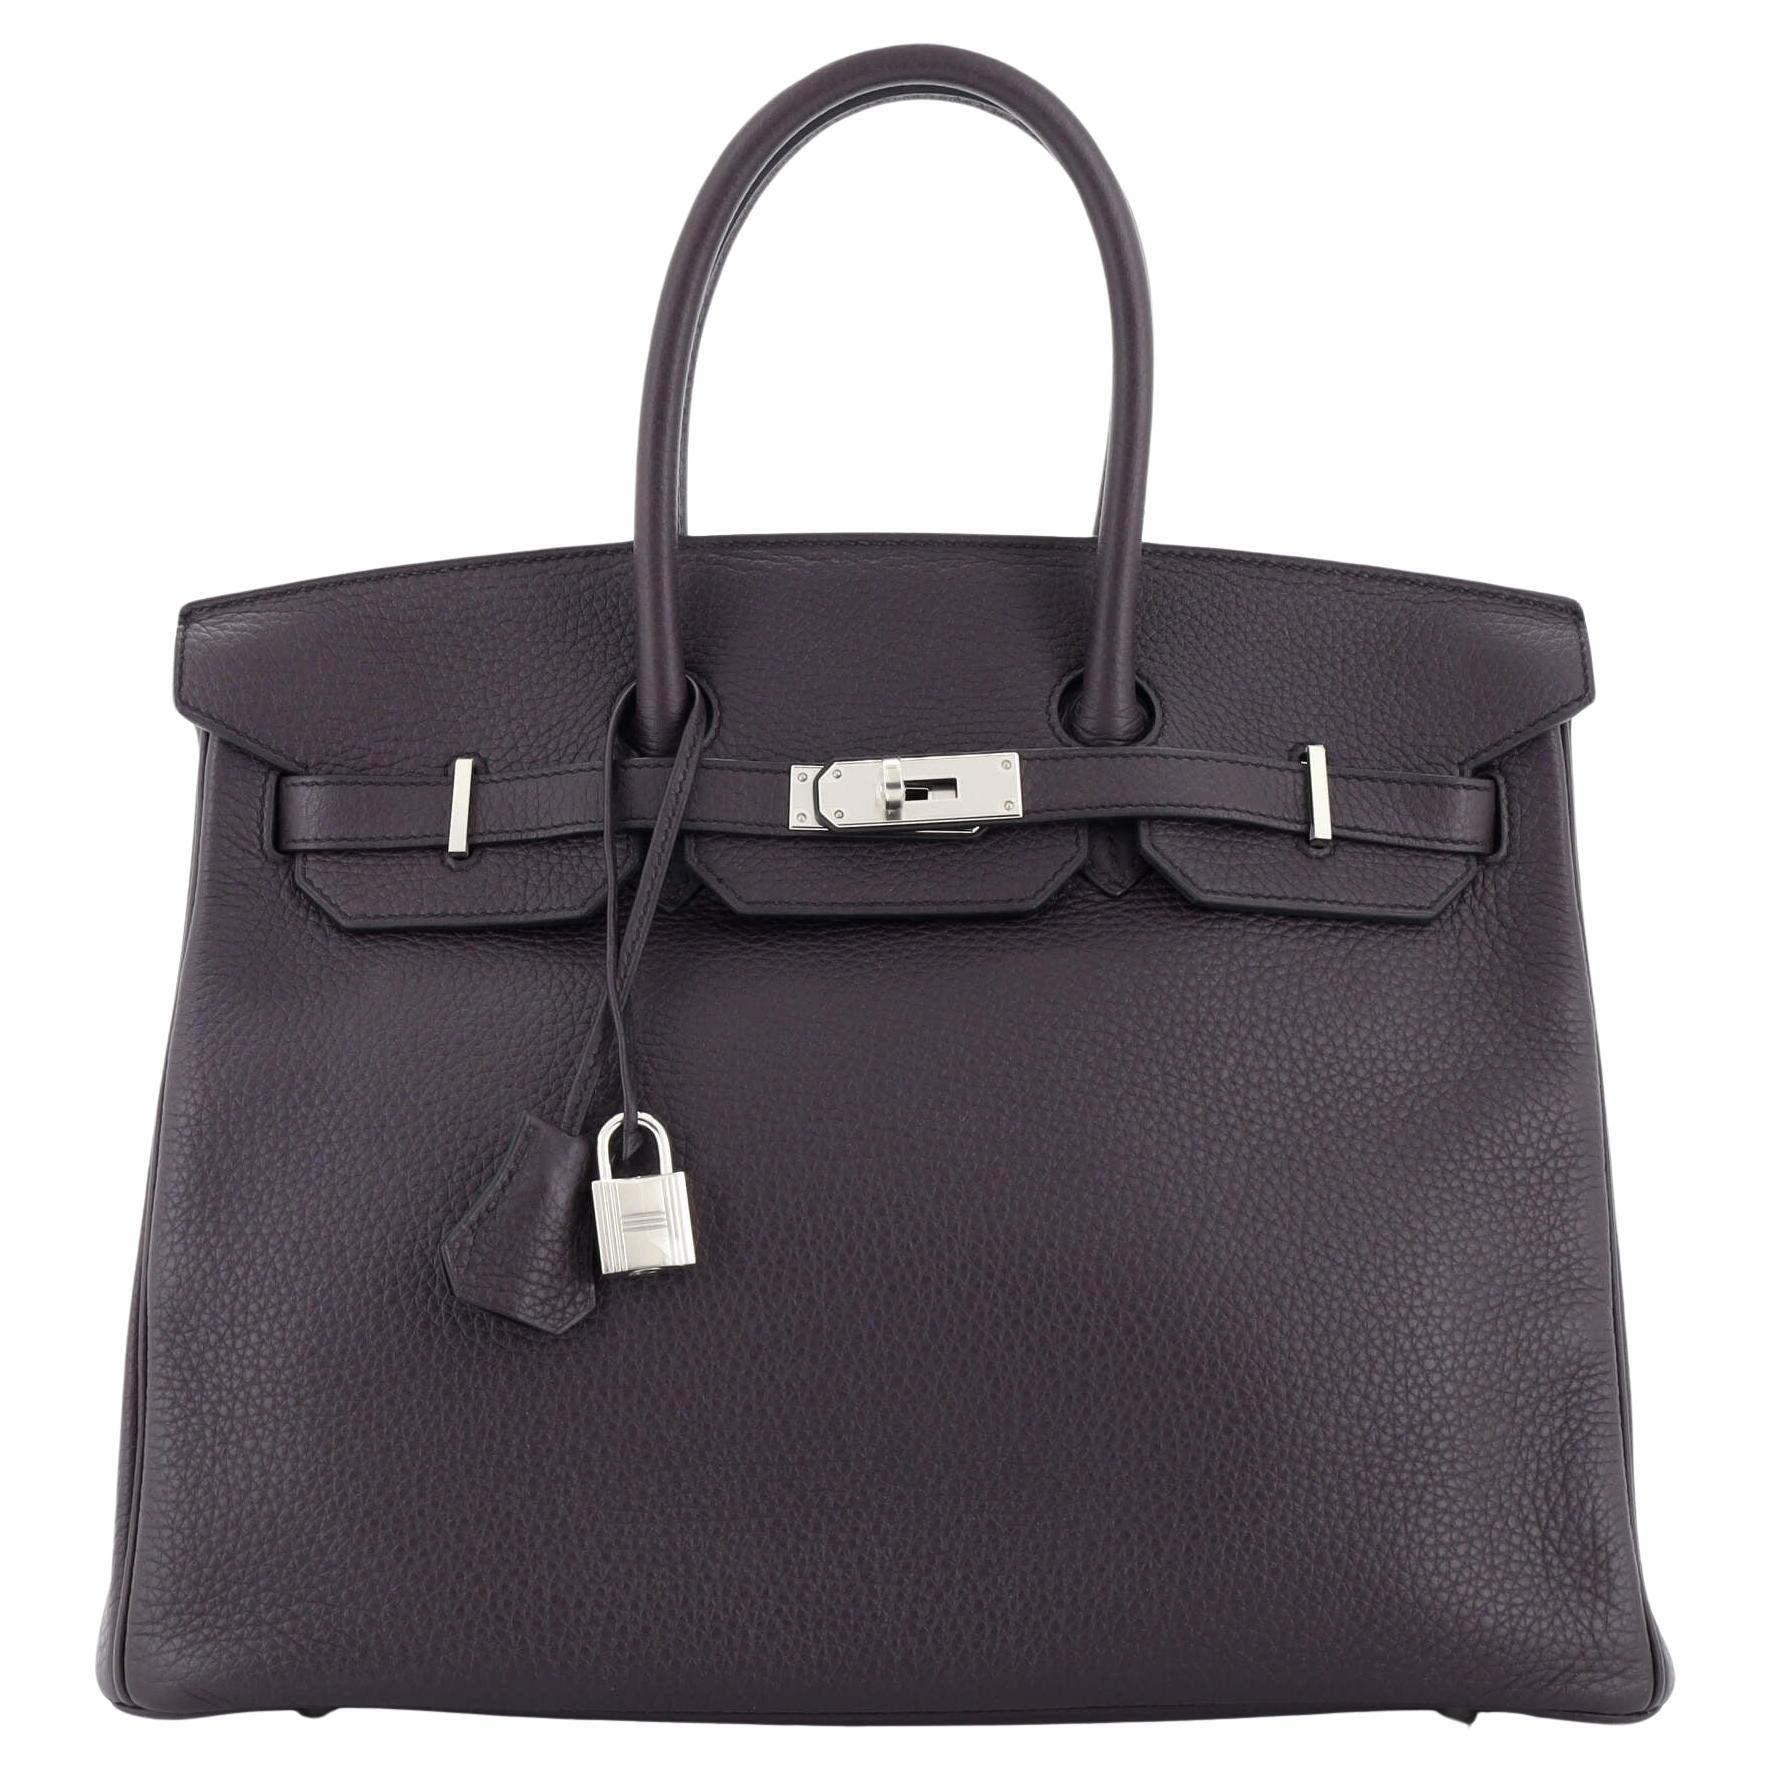 Hermes Birkin Handbag Prune Clemence with Palladium Hardware 35